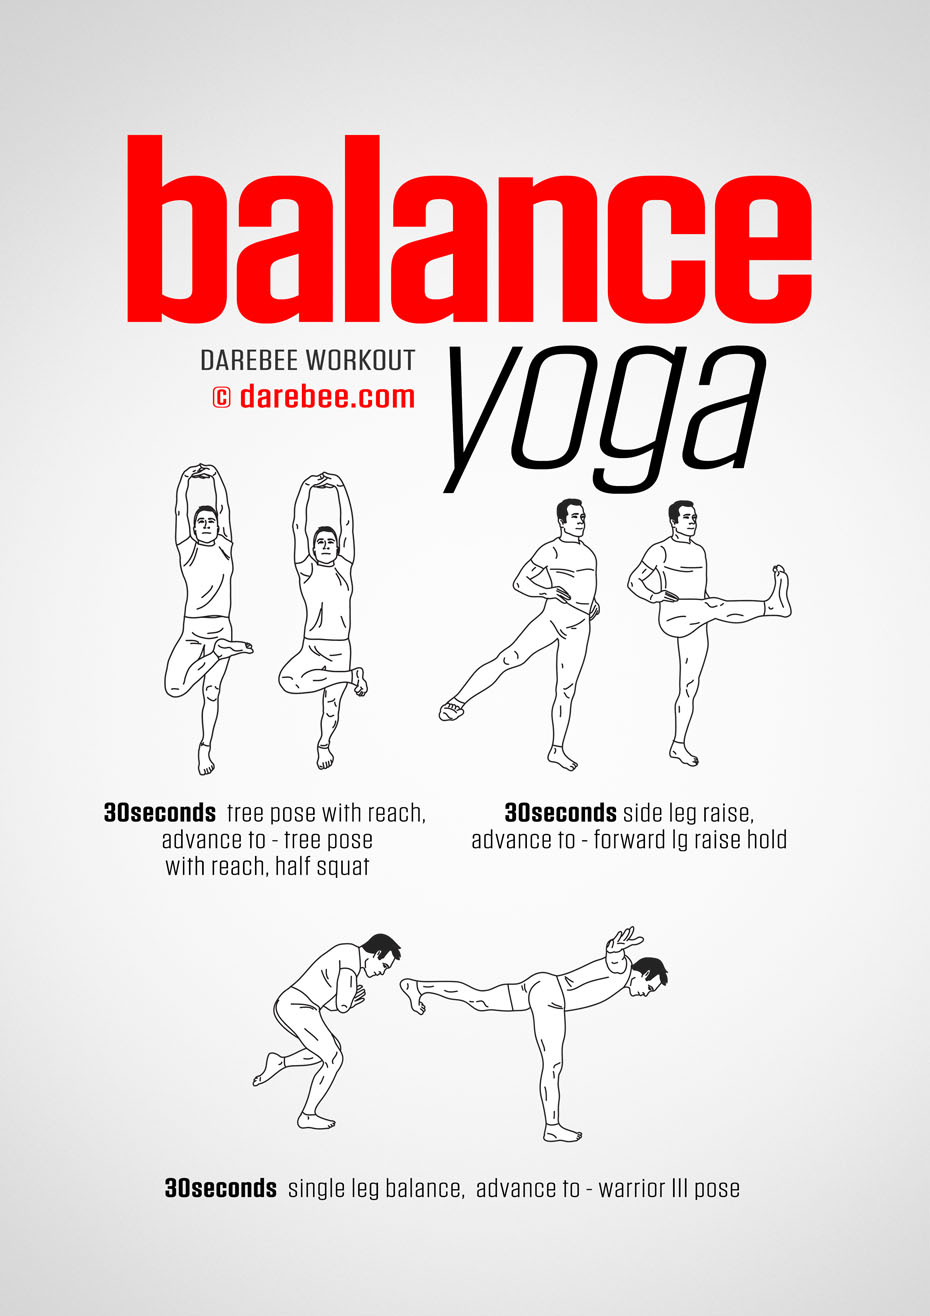 https://darebee.com/images/workouts/balance-yoga-workout.jpg